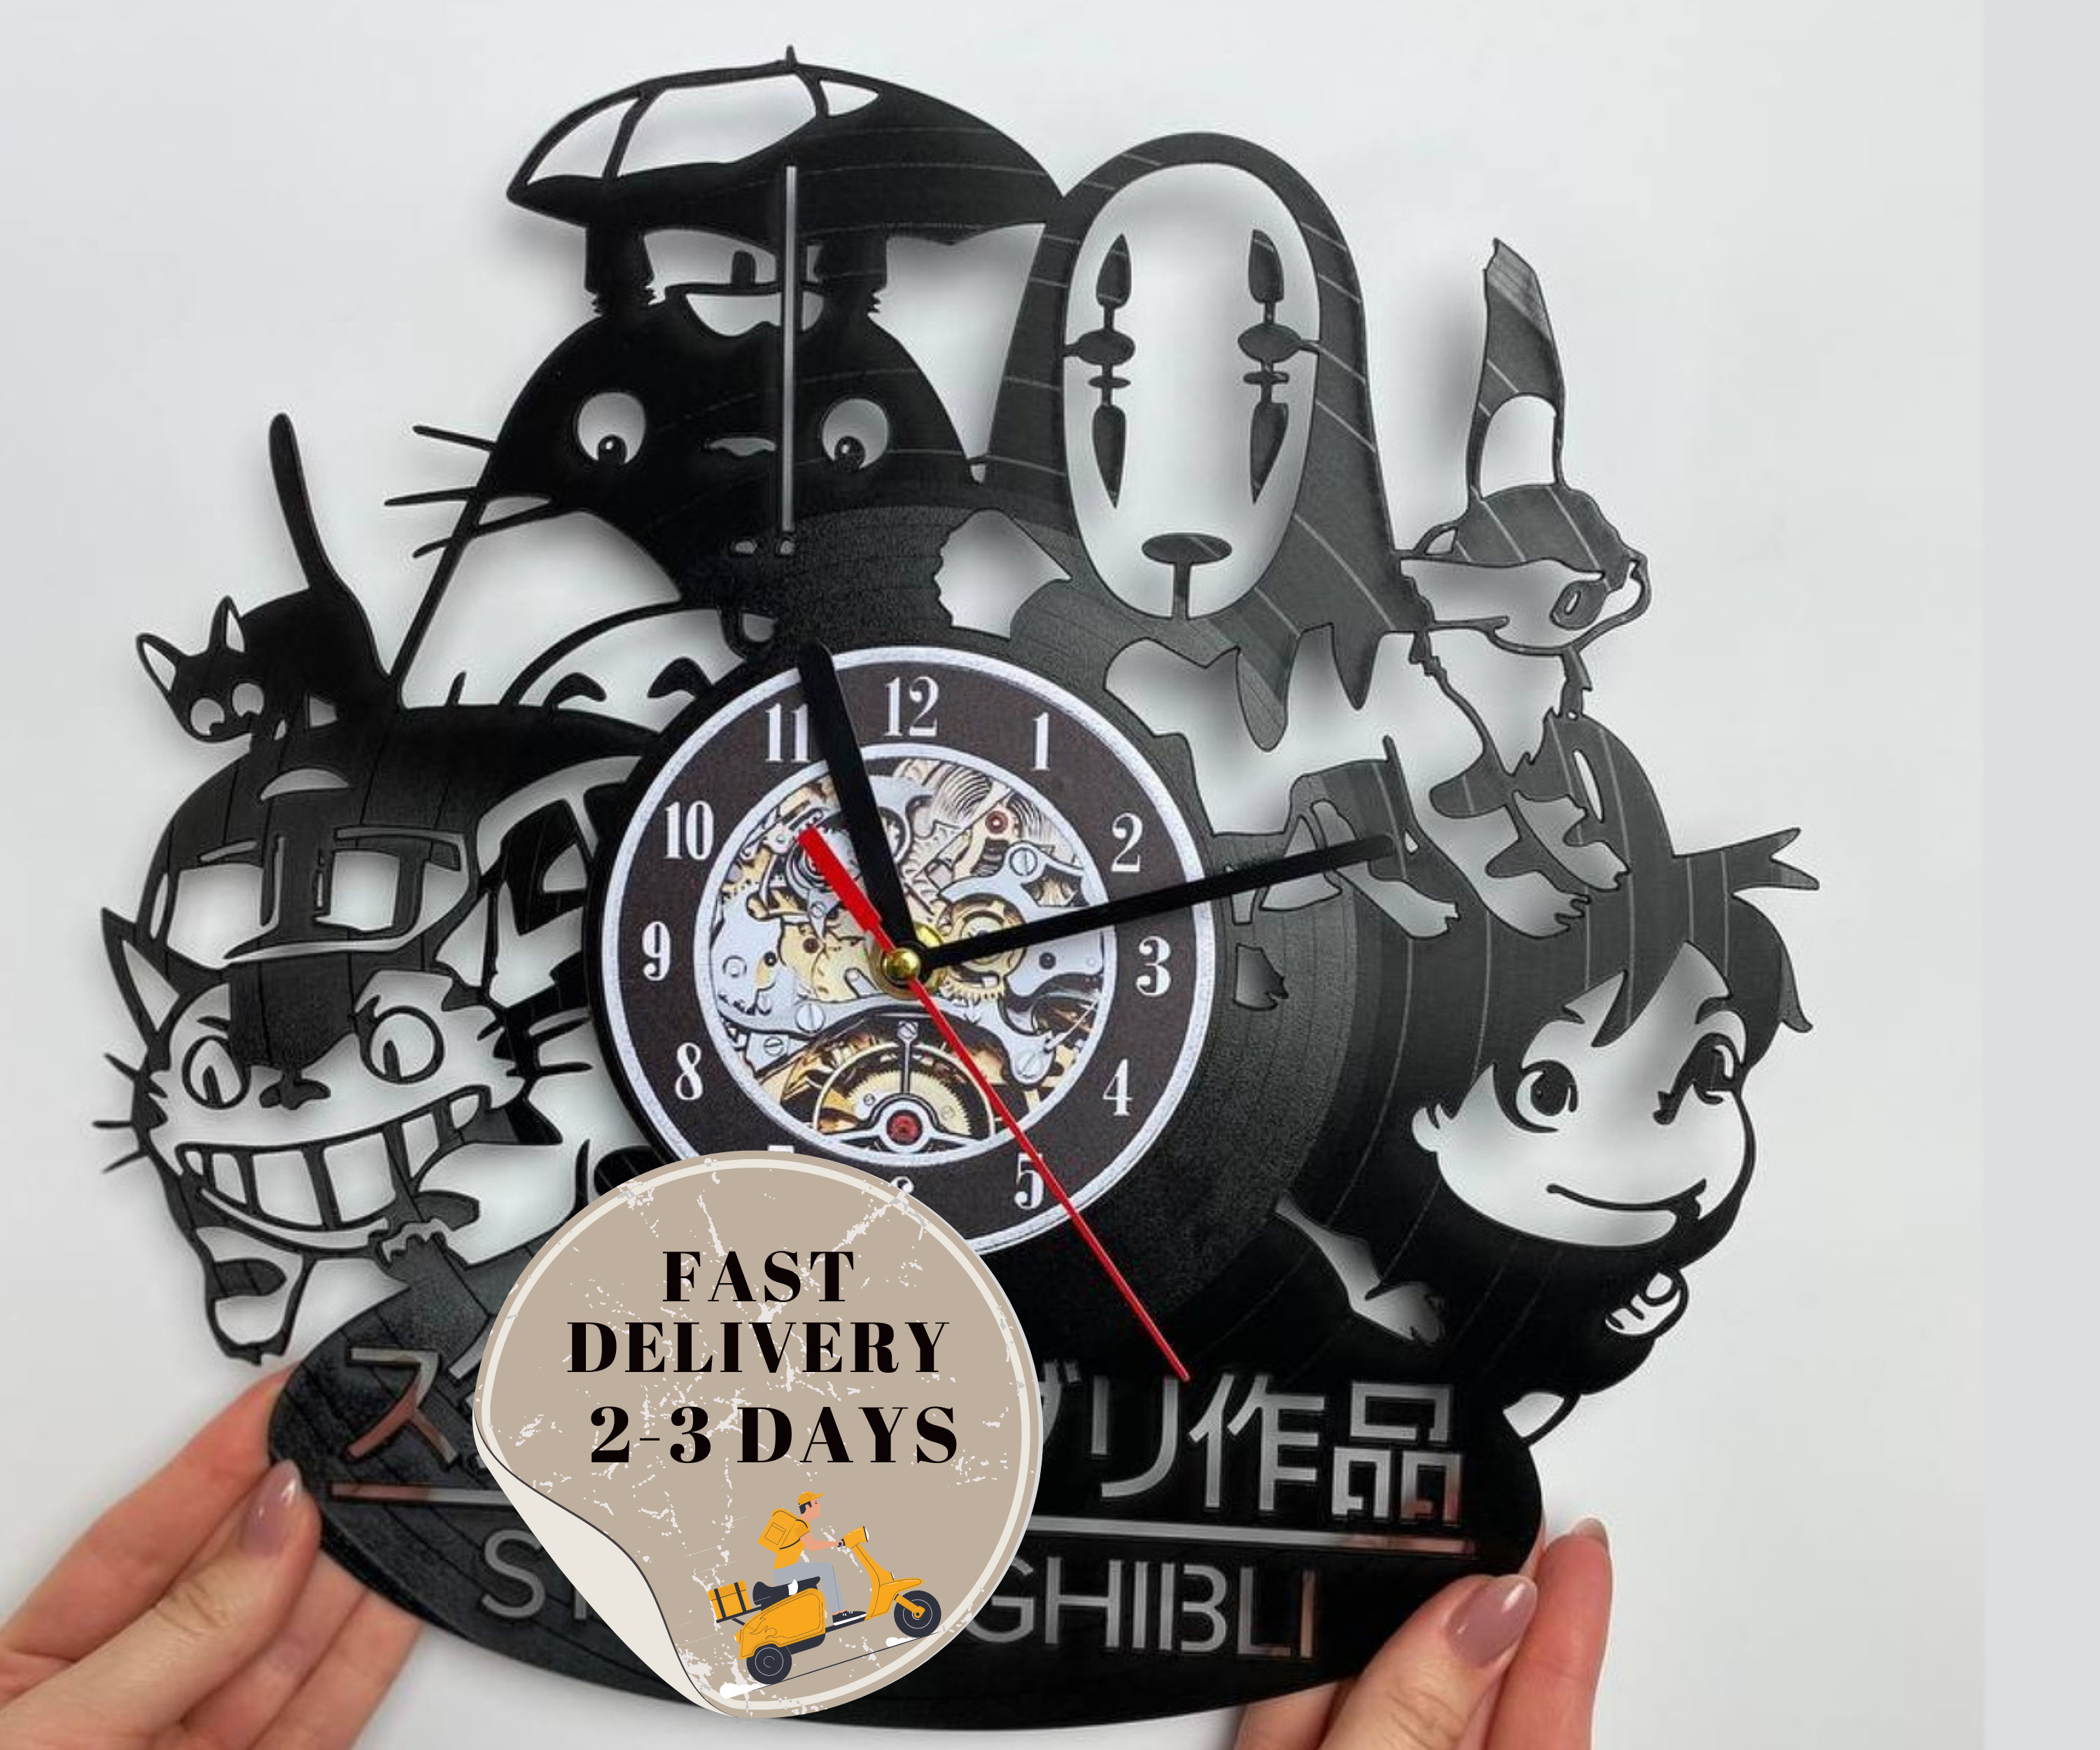 Studio Ghibli Anime Clock Vinyl Clock, Studio Ghibli India